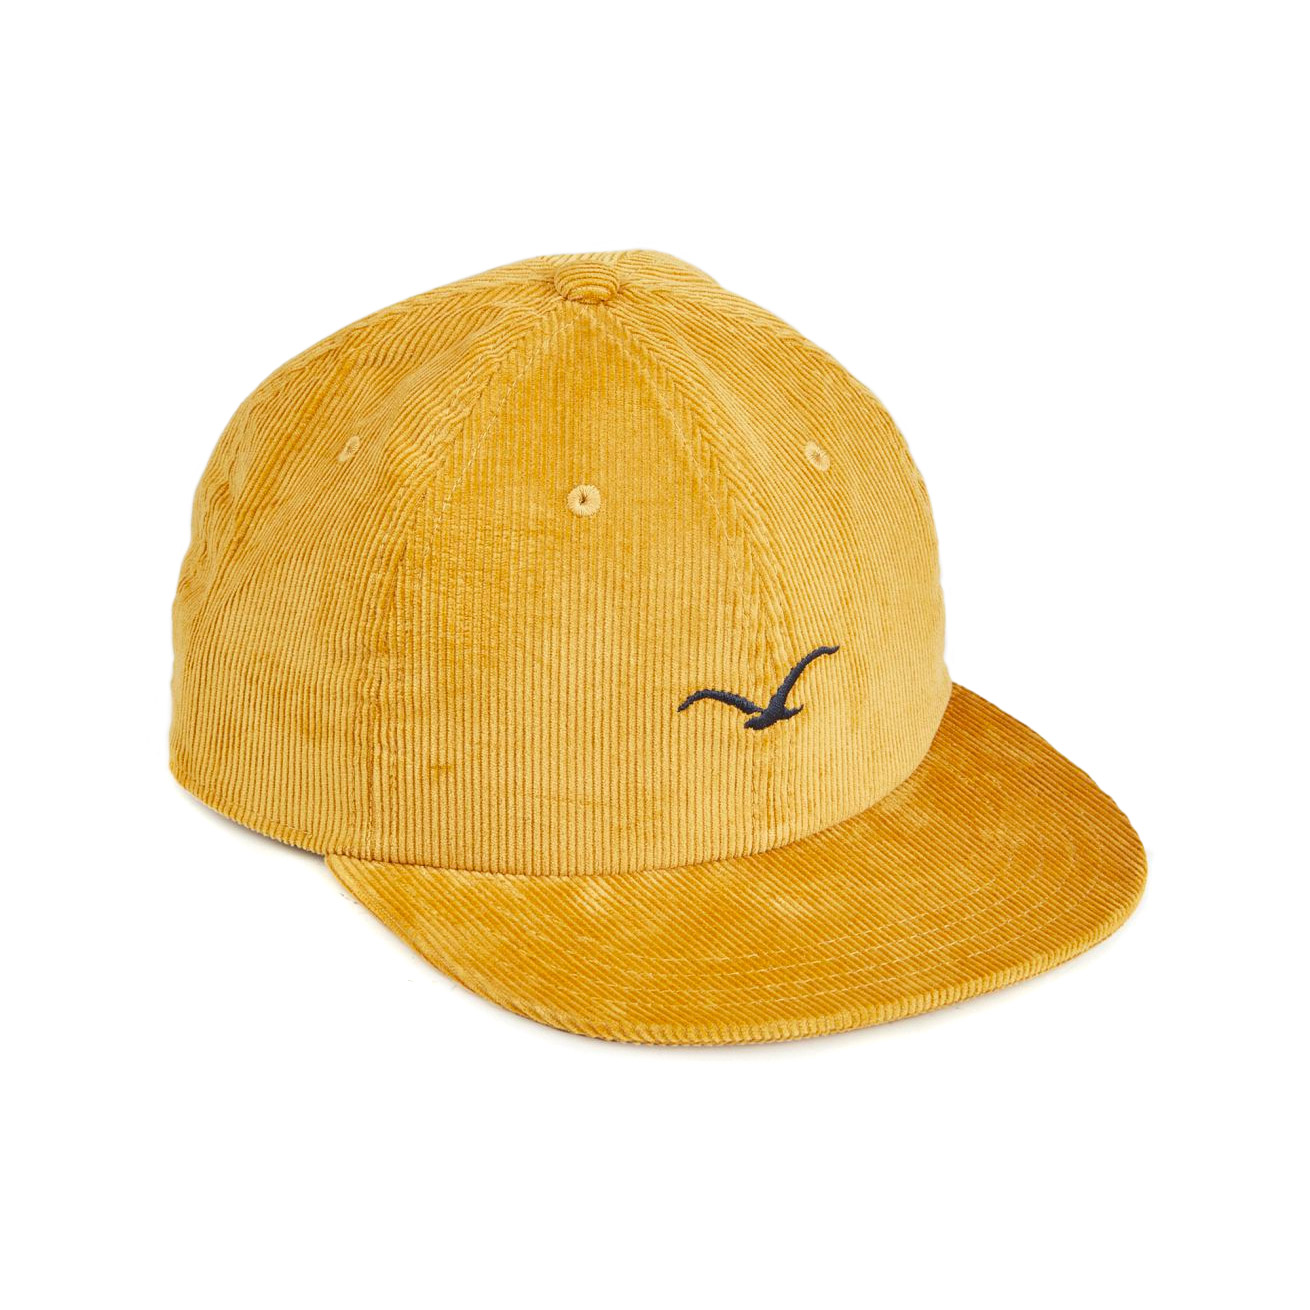 Cleptomanicx Snapback Cap Cord Möwe (golden yellow)